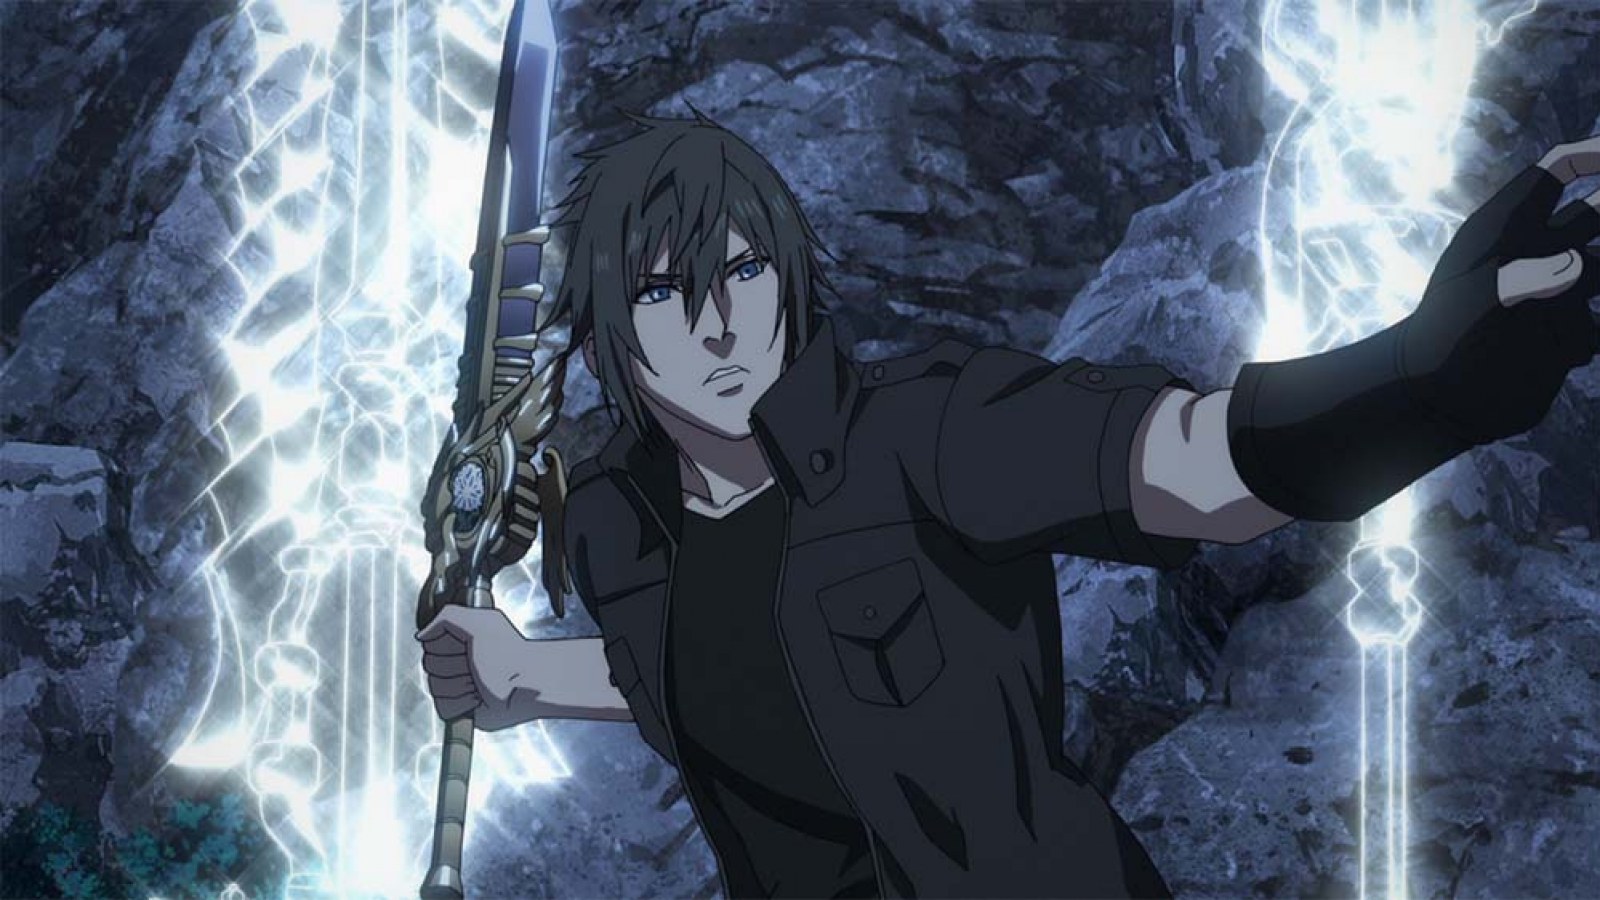 Brotherhood Final Fantasy 15: Square Enix announces anime OVA tie